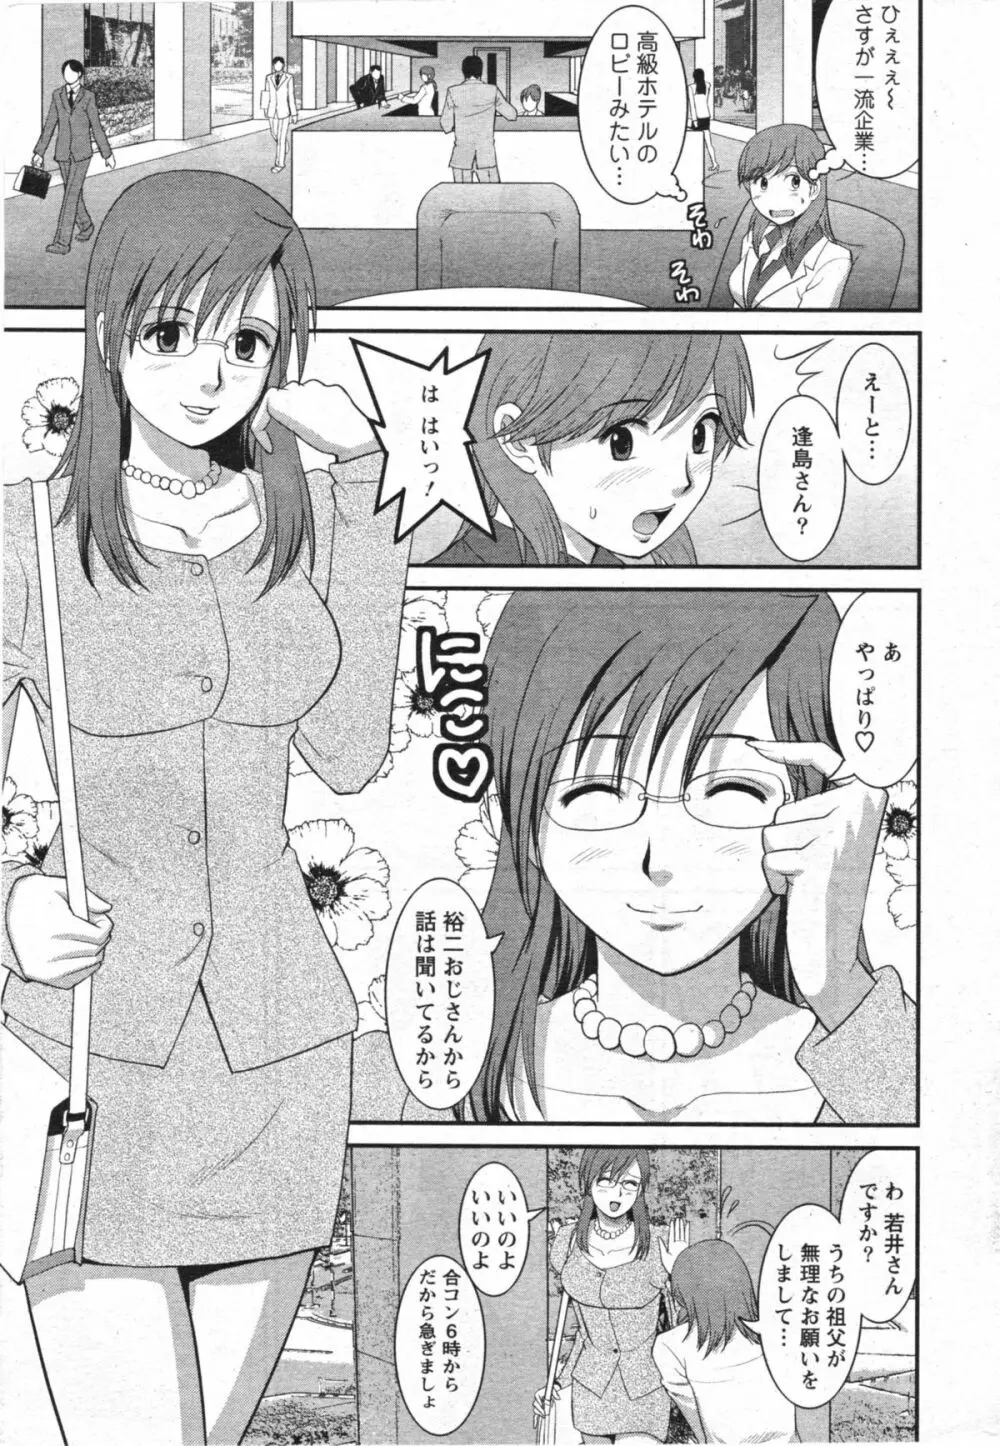 Haken no Muuko San 11 8ページ